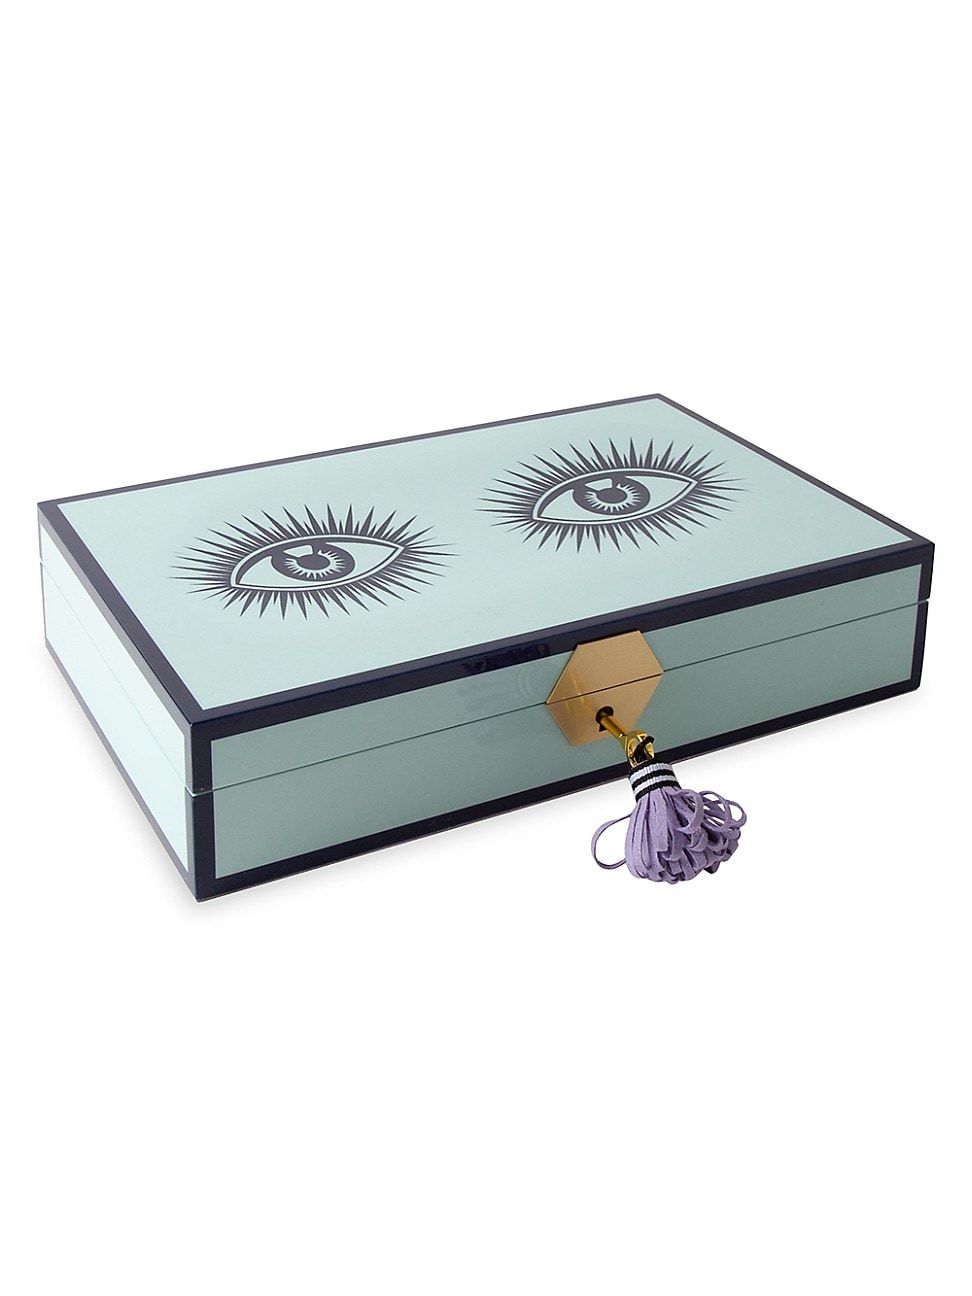 Le Wink Lacquer Jewelry Box | Saks Fifth Avenue